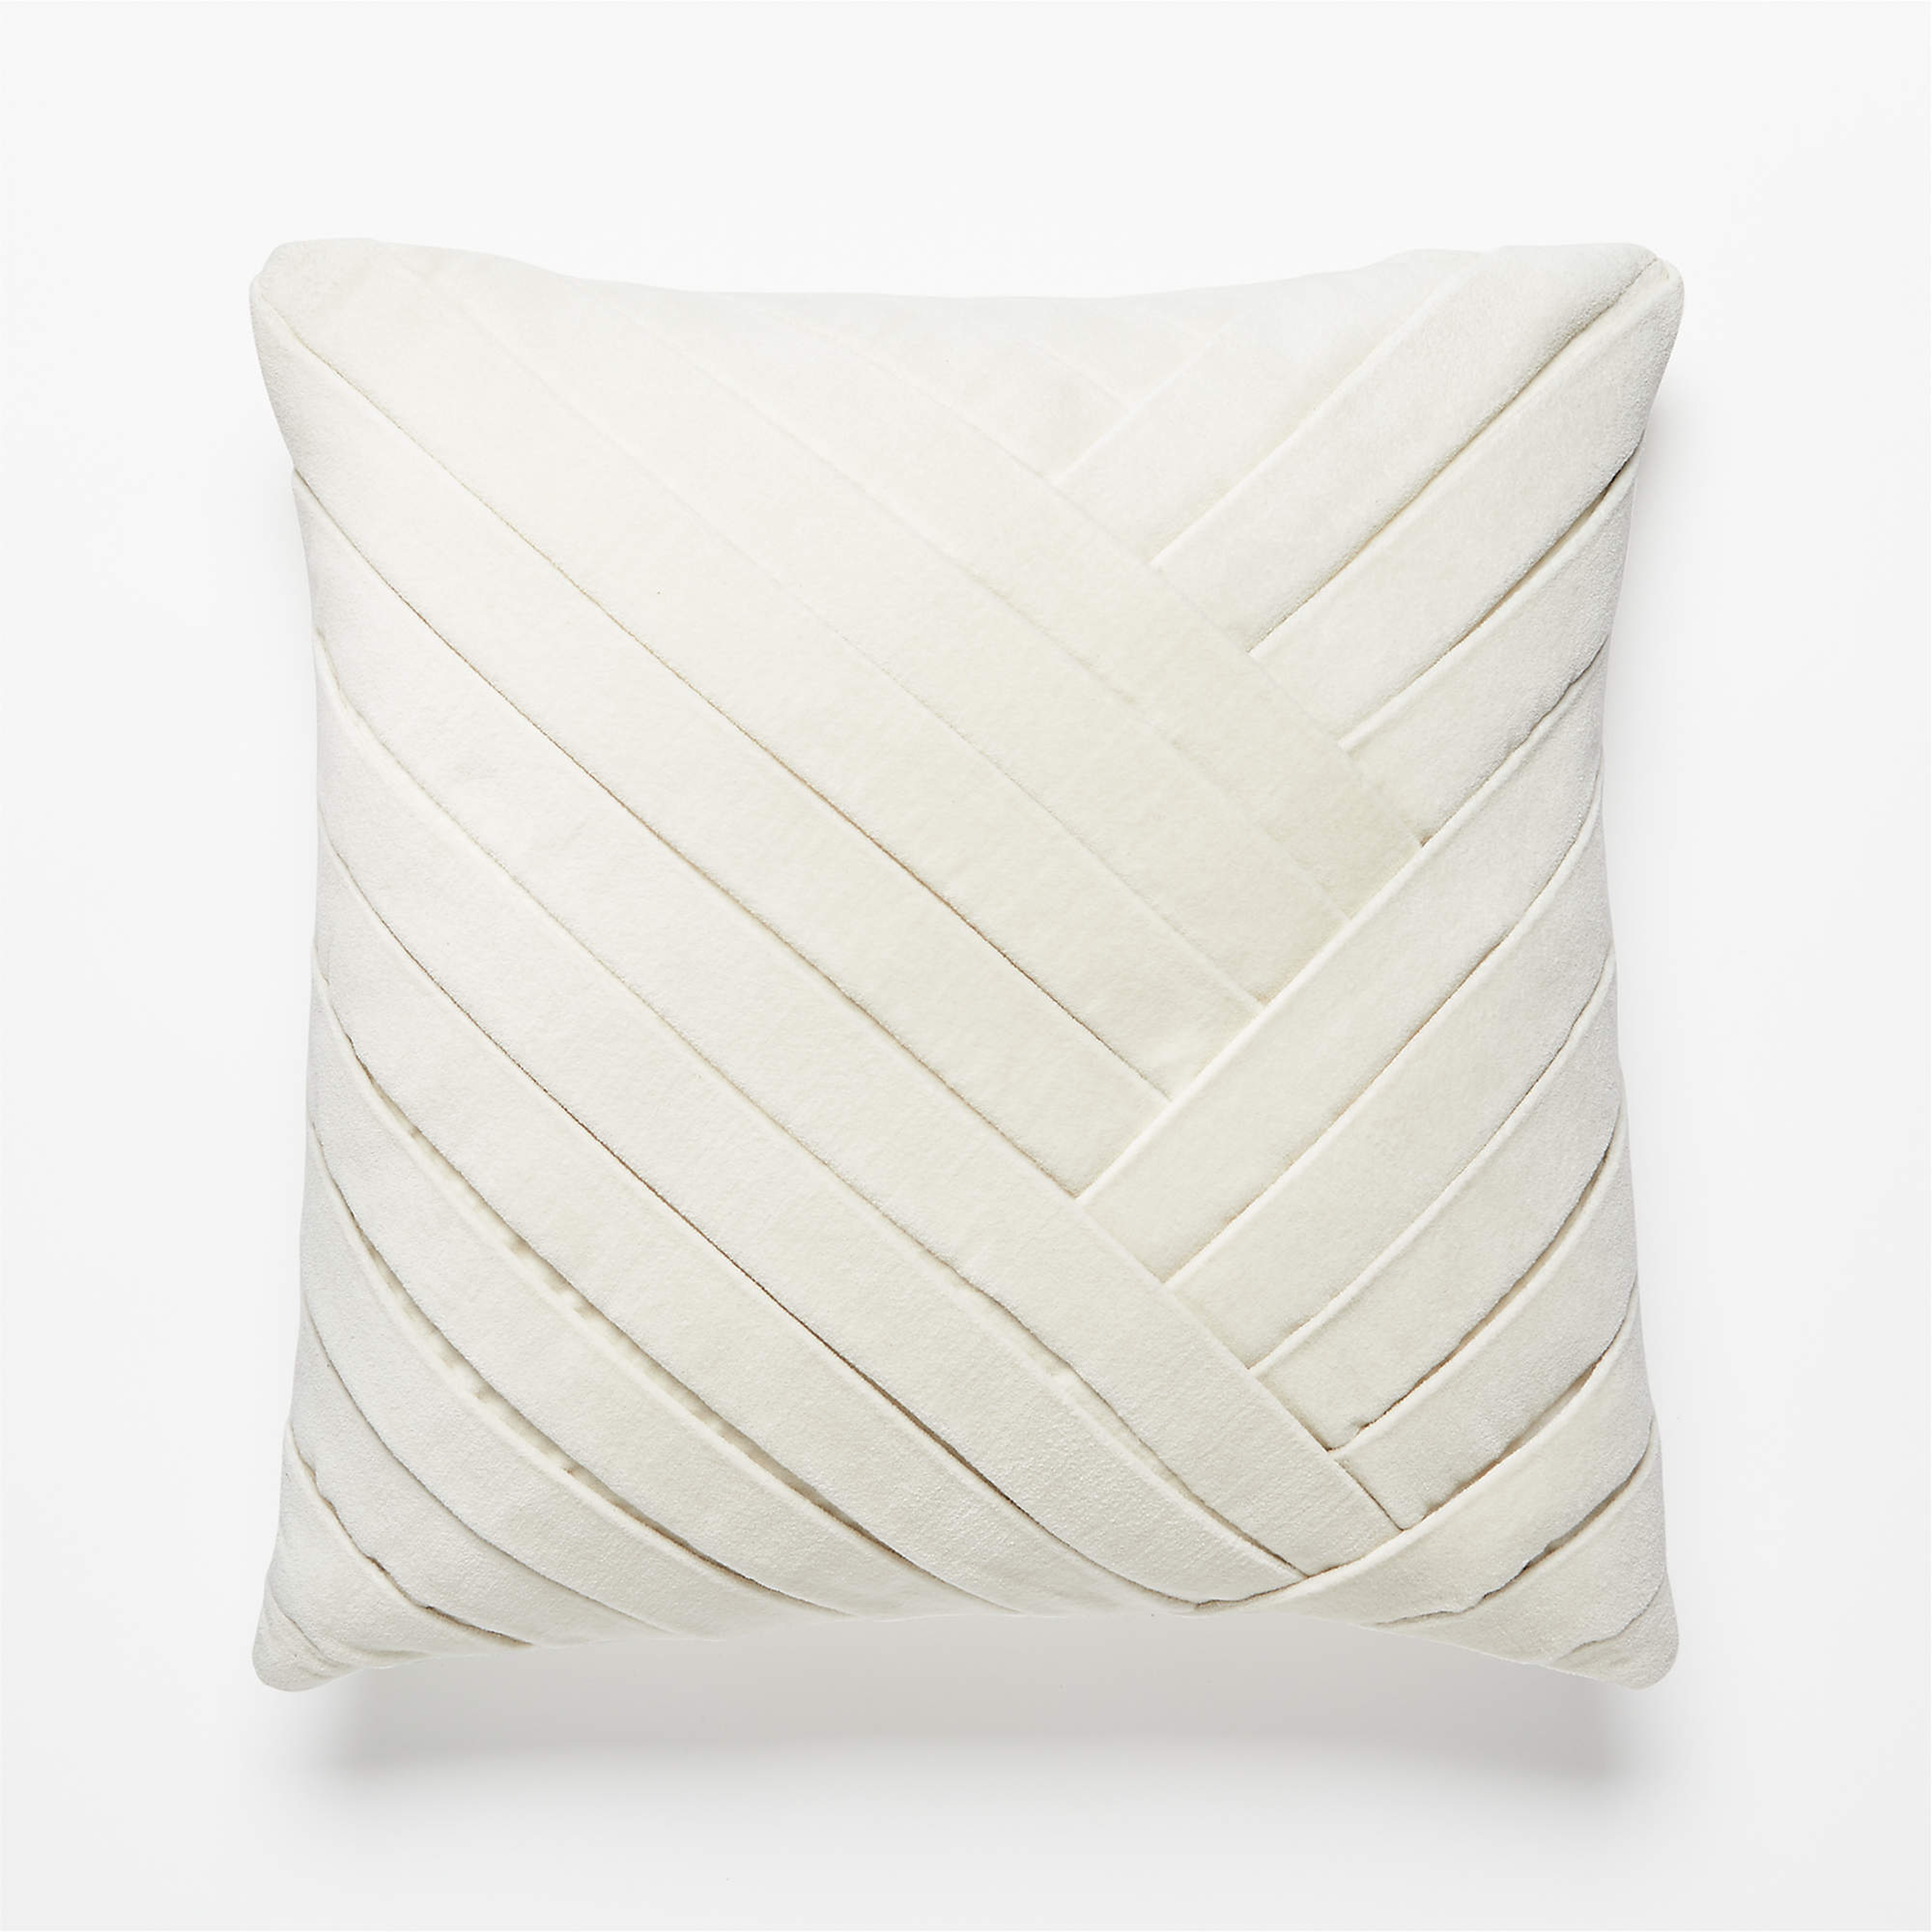 Leger Velvet Pillow Ivory with Feather-Down Insert, 18" x 18" - CB2